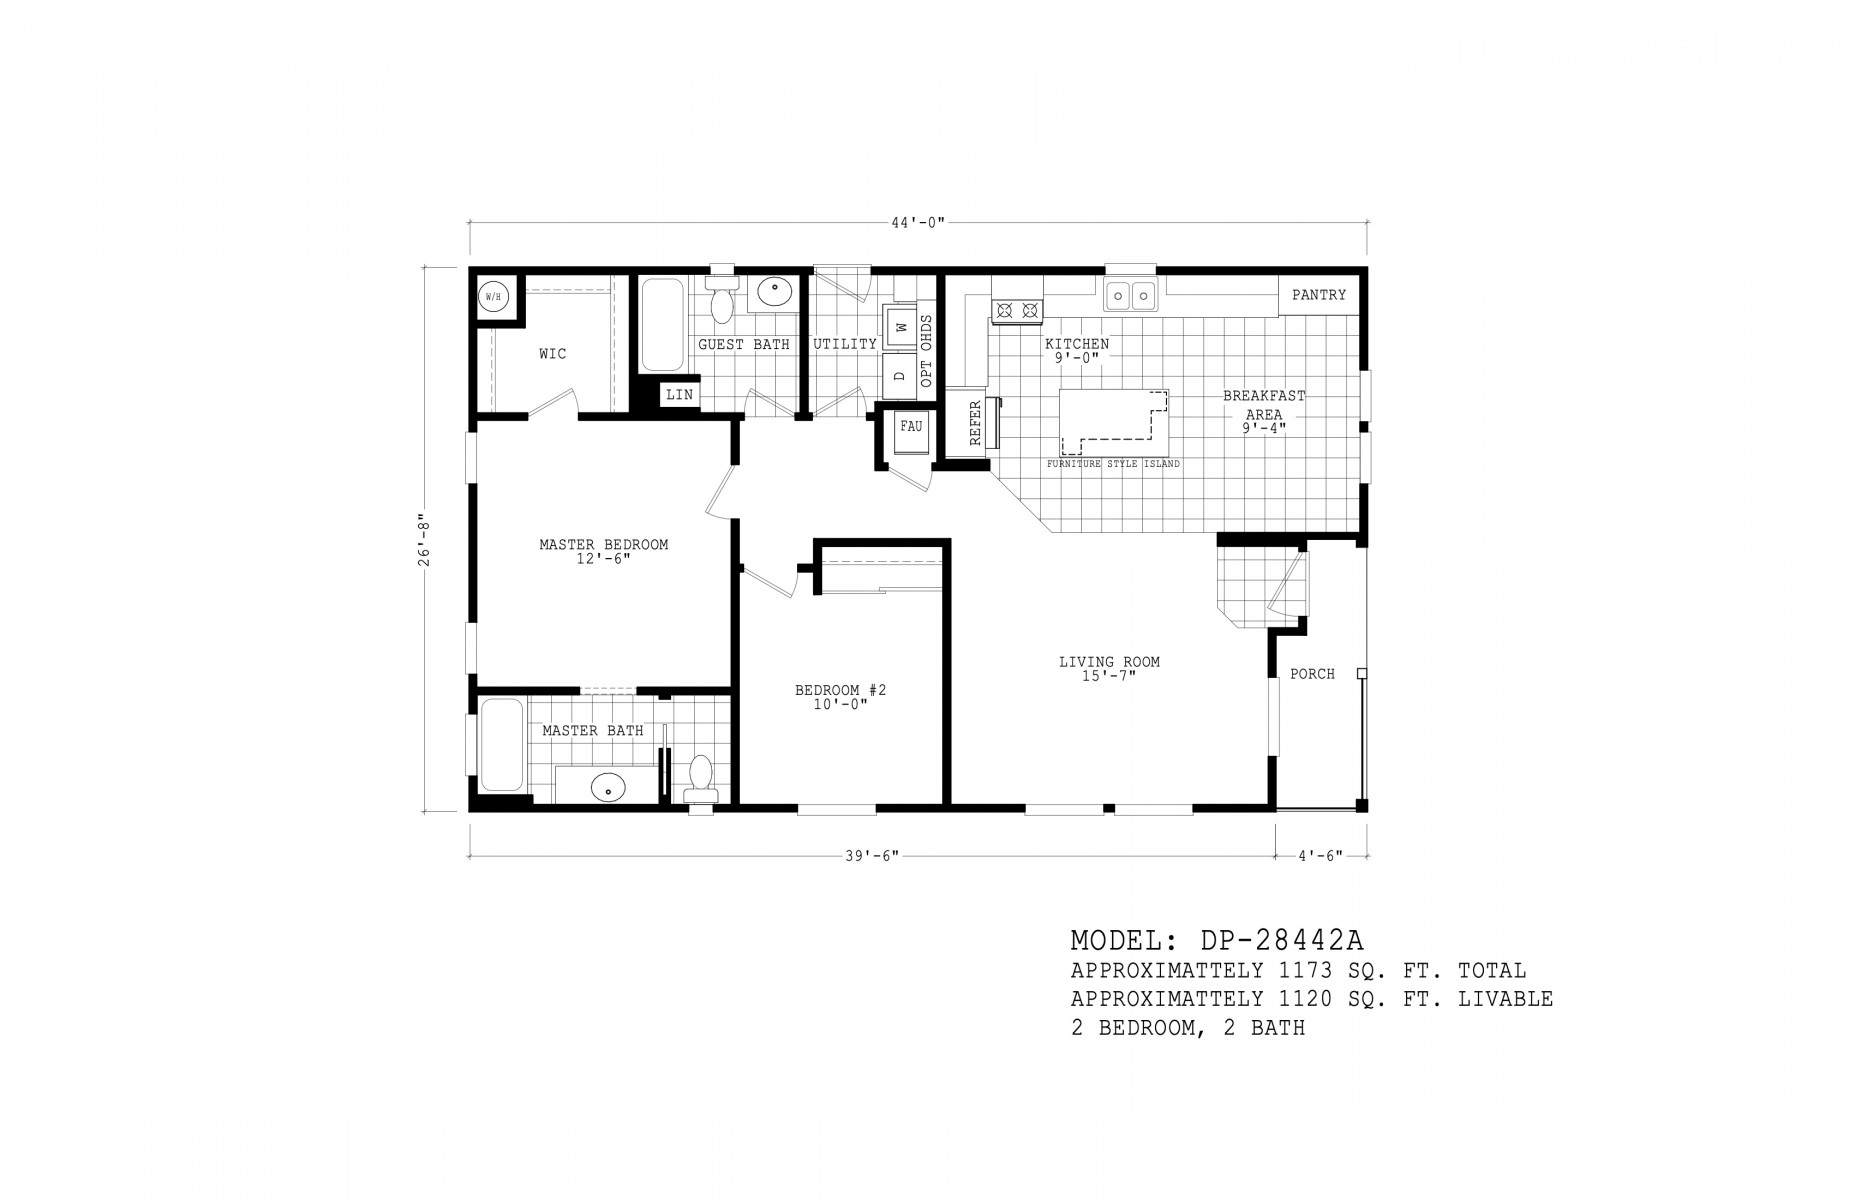 Homes Direct Modular Homes - Model DP28442A - Floorplan